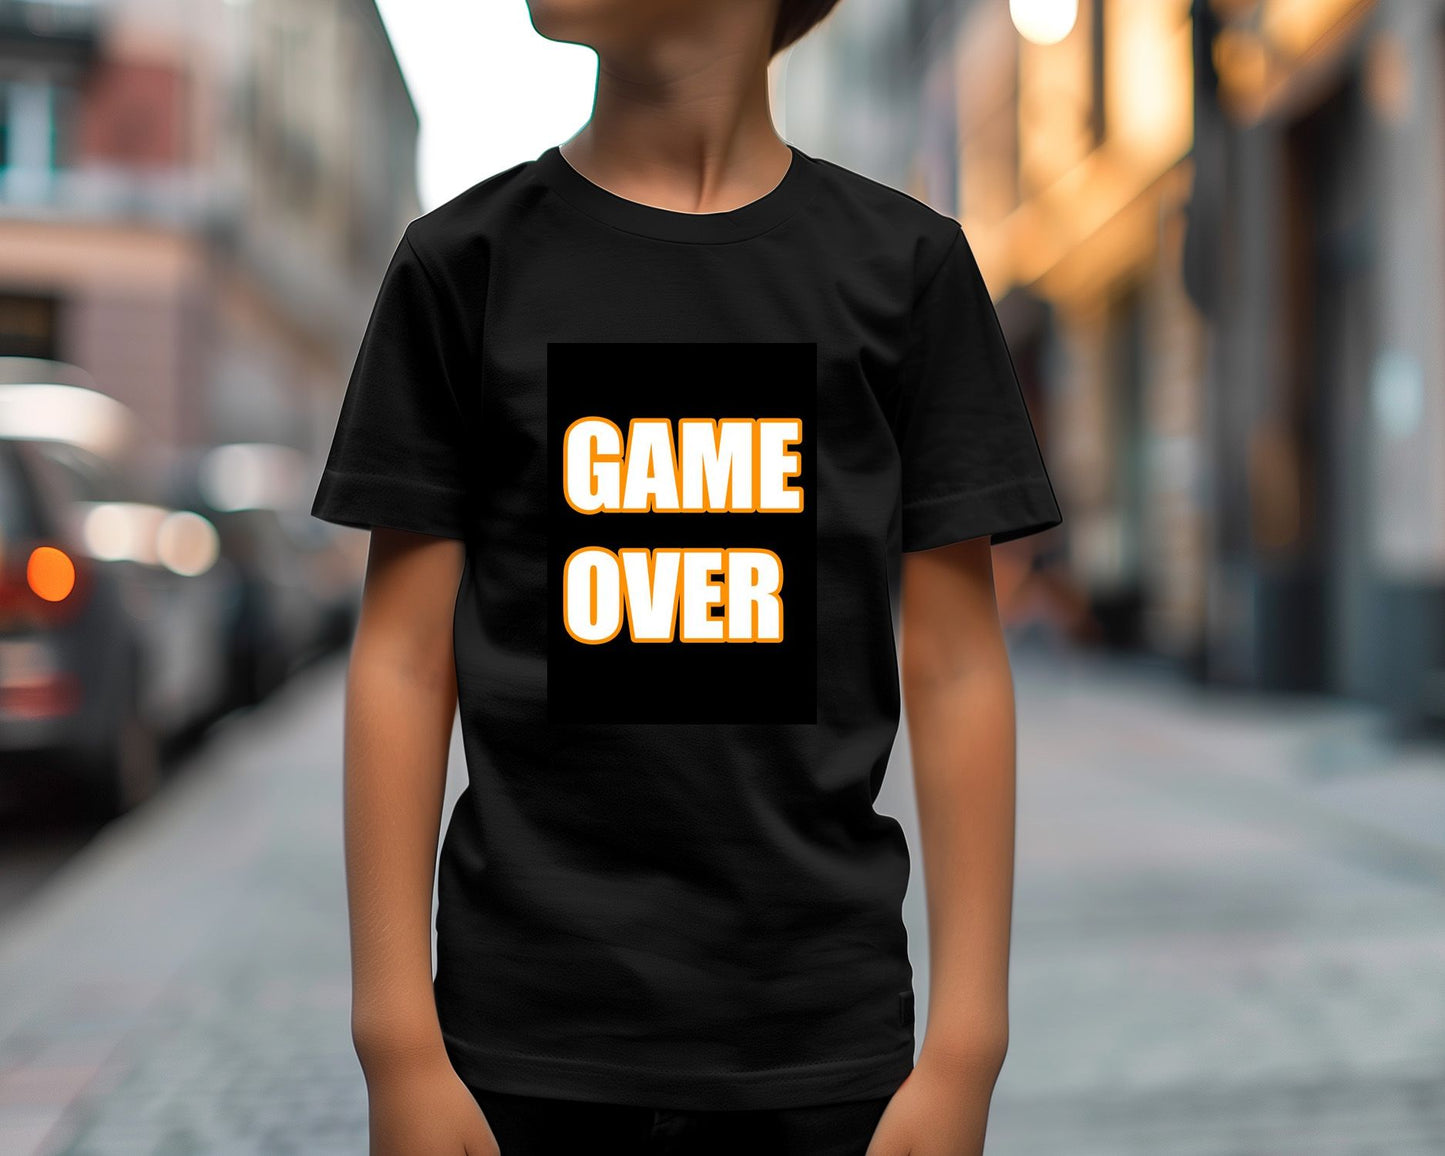 GAME OVER - @hikenthree